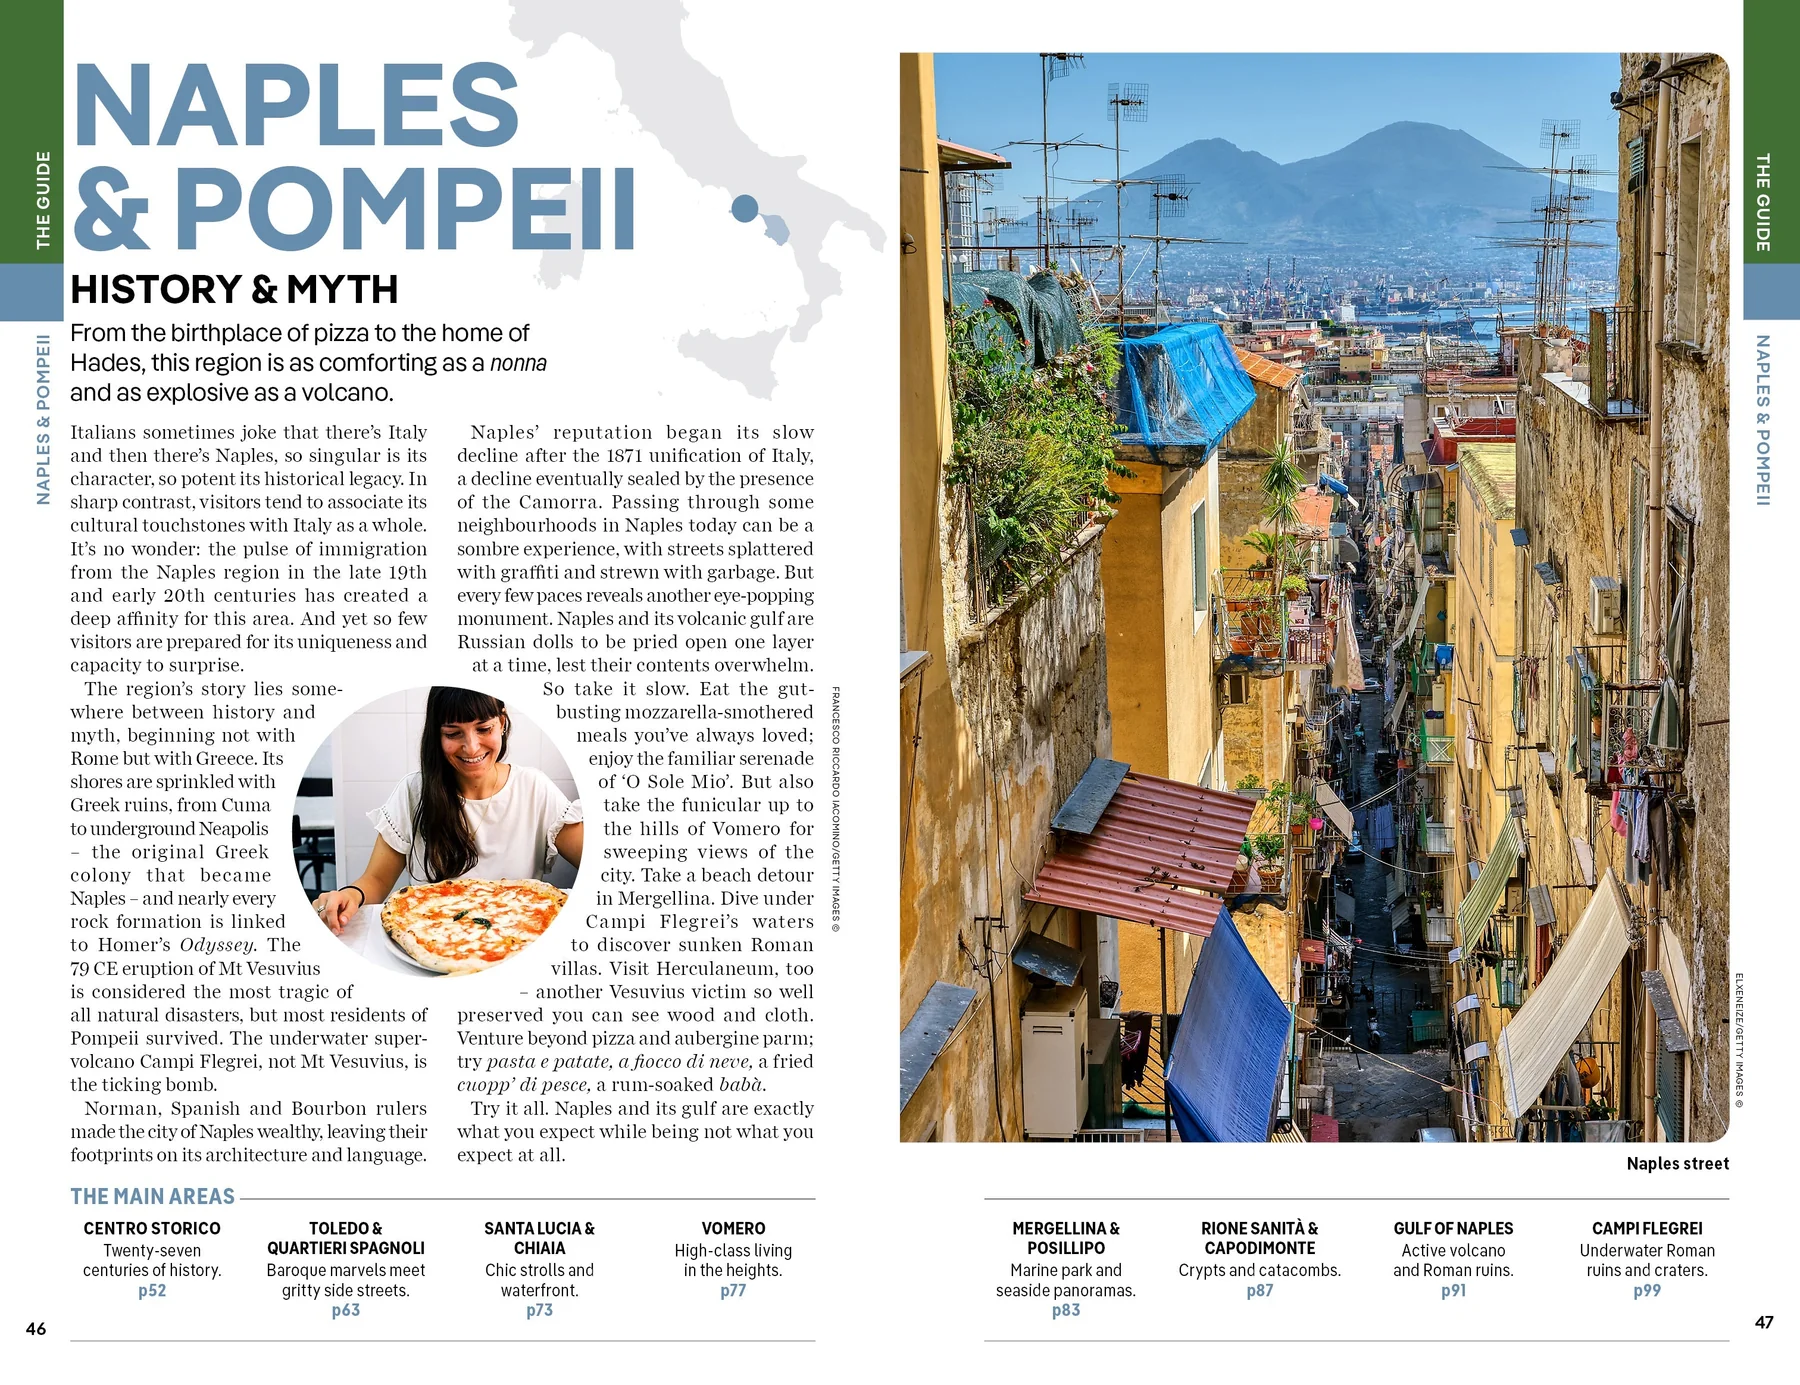 Naples, Pompeii & the Amalfi Coast Lonely Planet